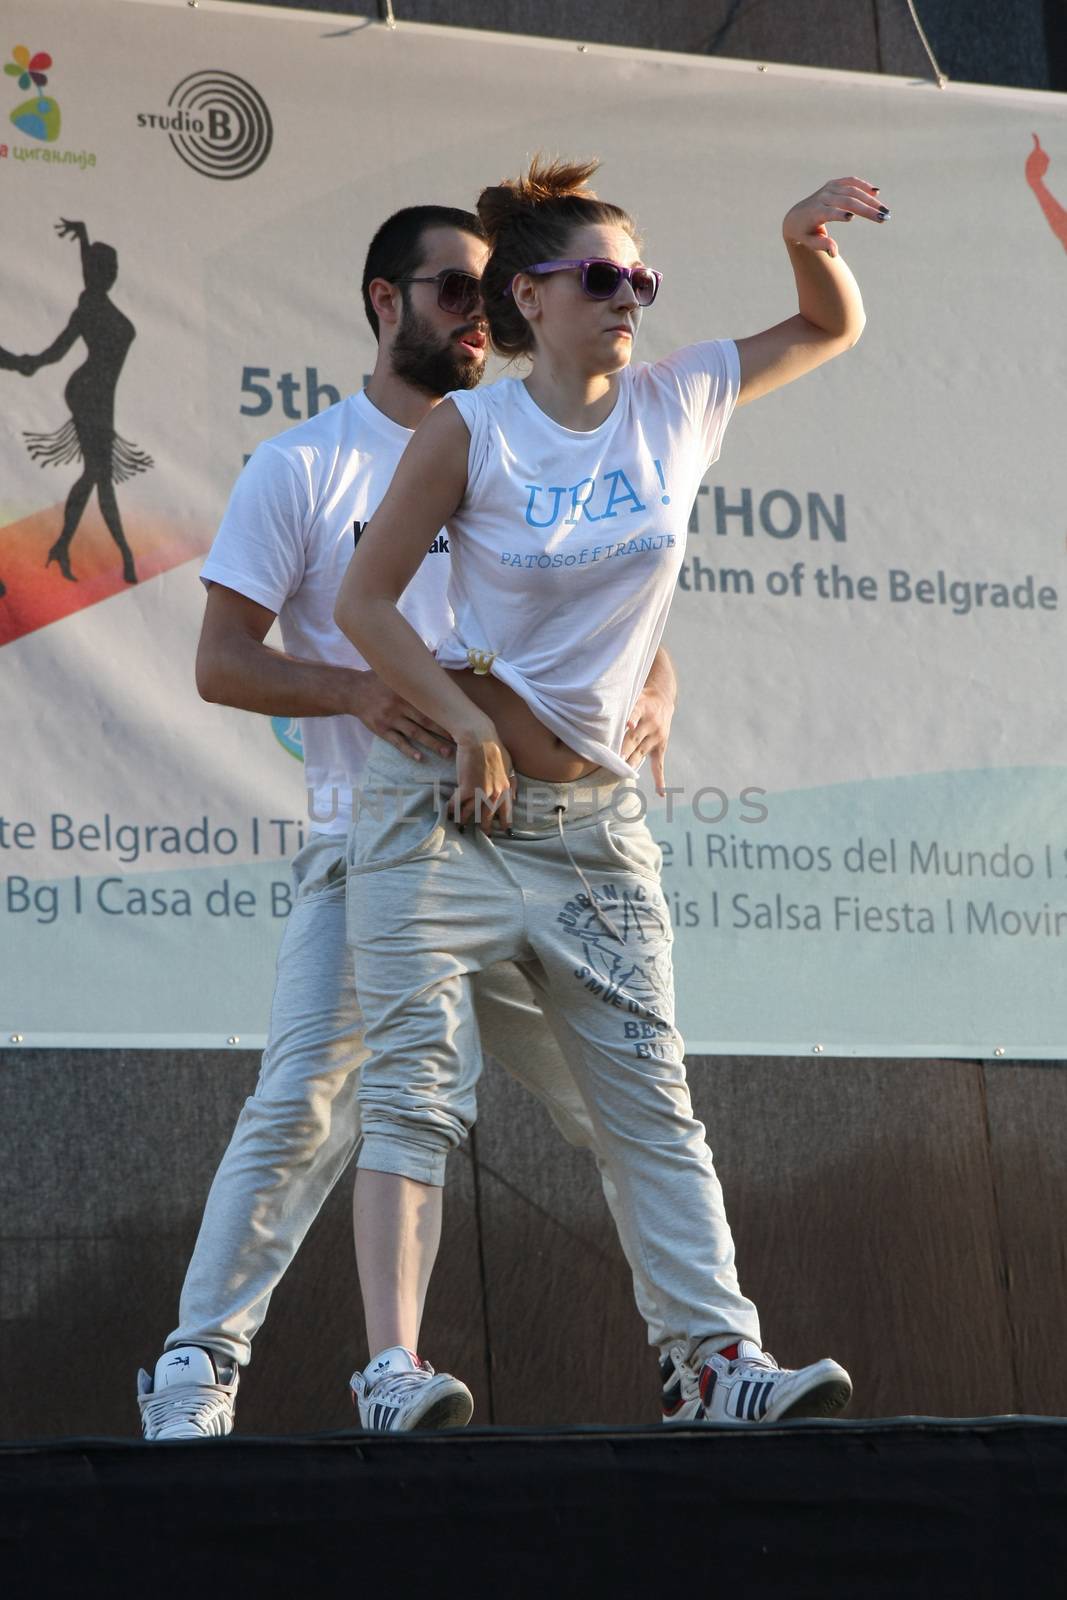 The 5th Belgrade Latino Marathon held on Saturday, the 30th of August 2014 in Belgrade Serbia